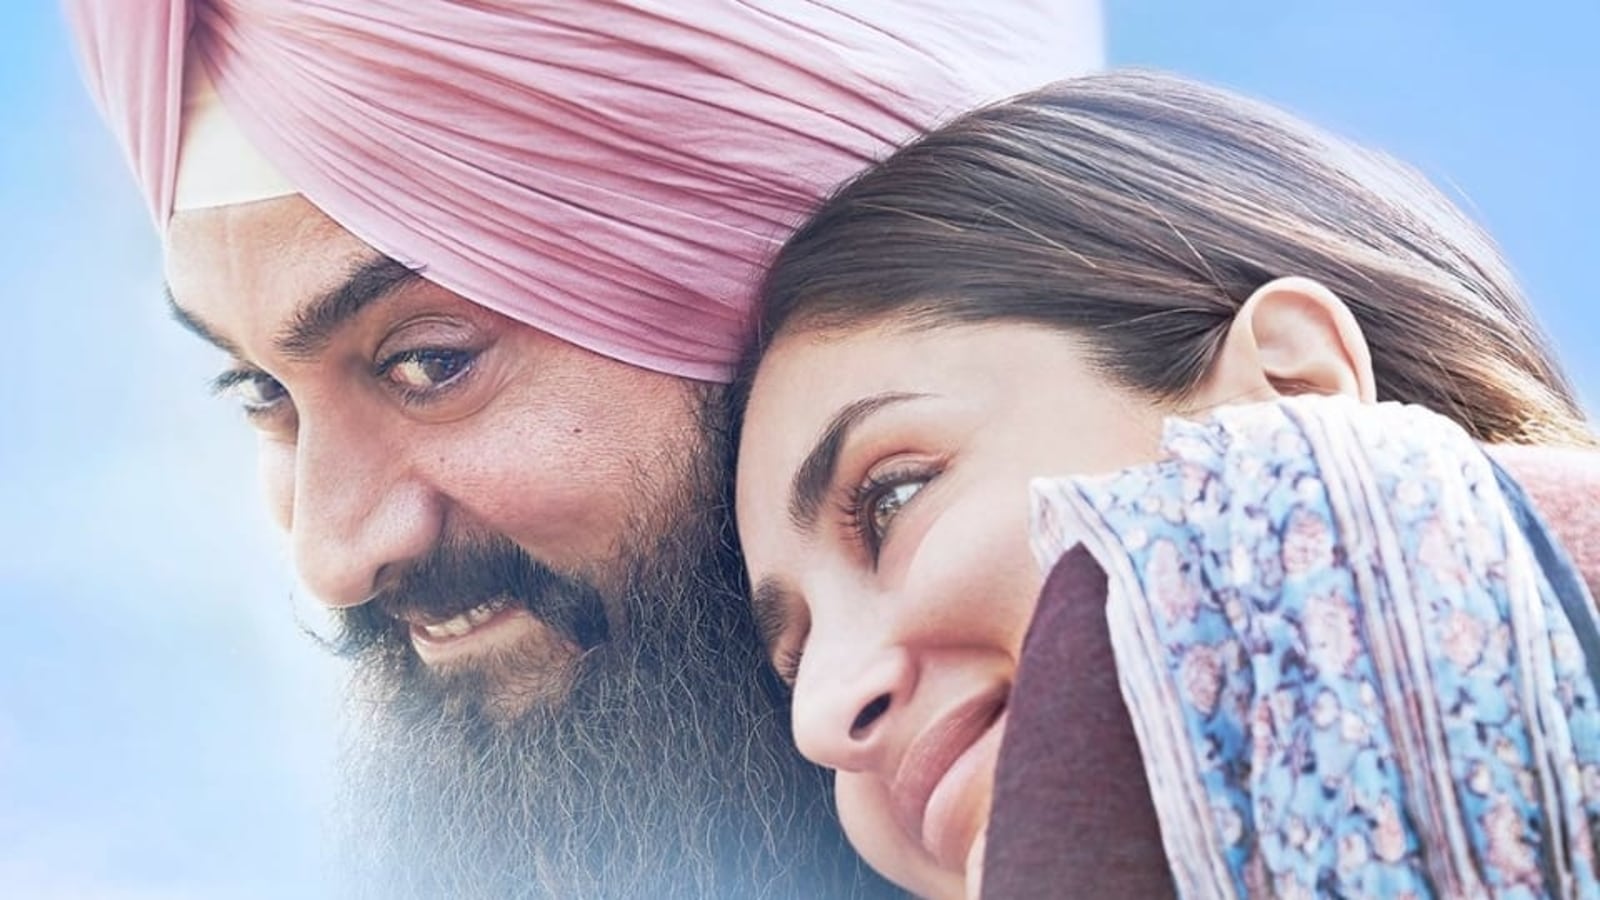 Laal Singh Chaddha: Aamir Khan, Kareena Kapoor cuddle up in new poster, Baisakhi 2022 is new release date - Hindustan Times